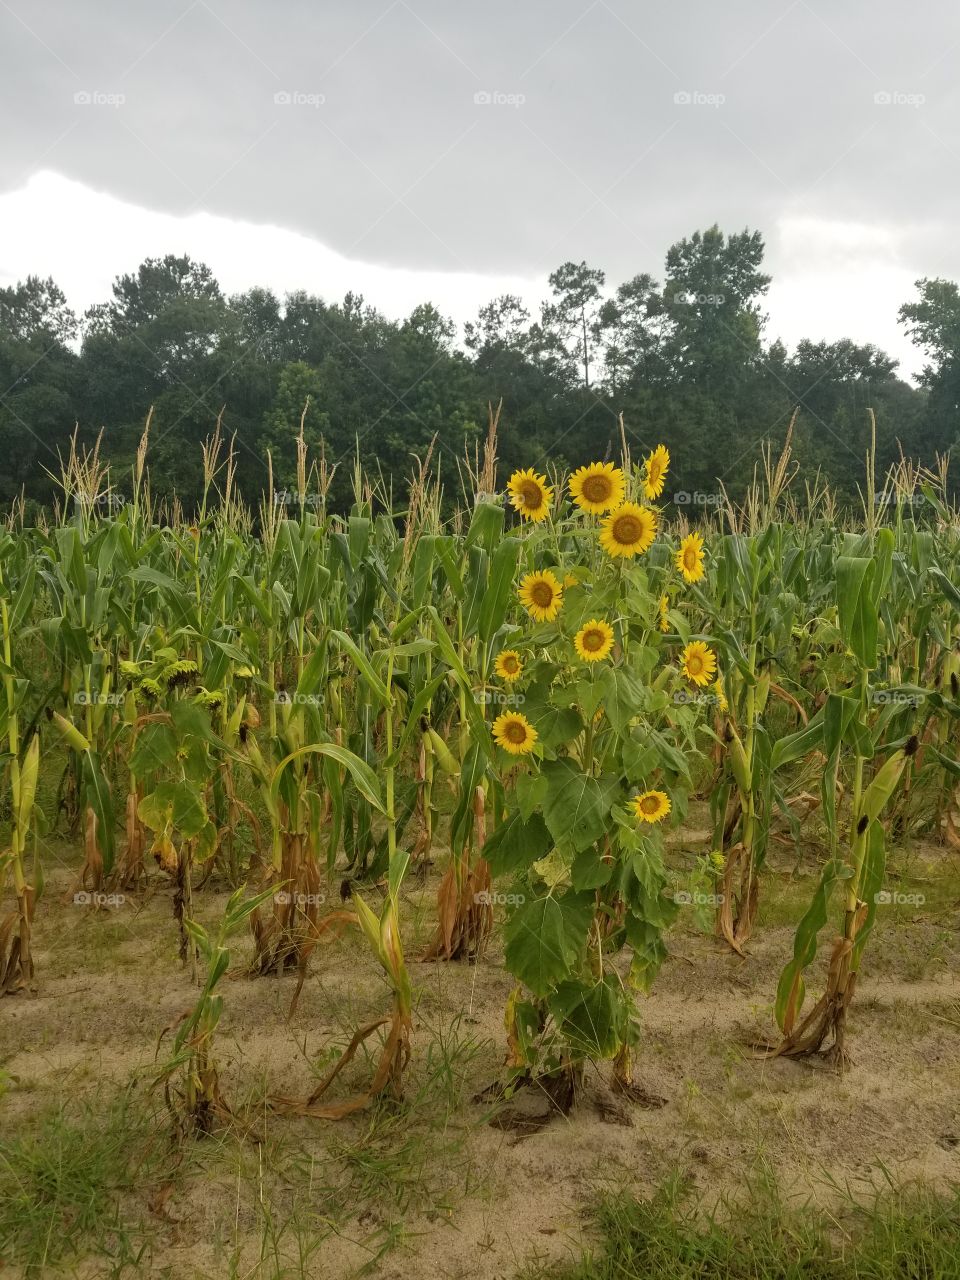 sunflower corn